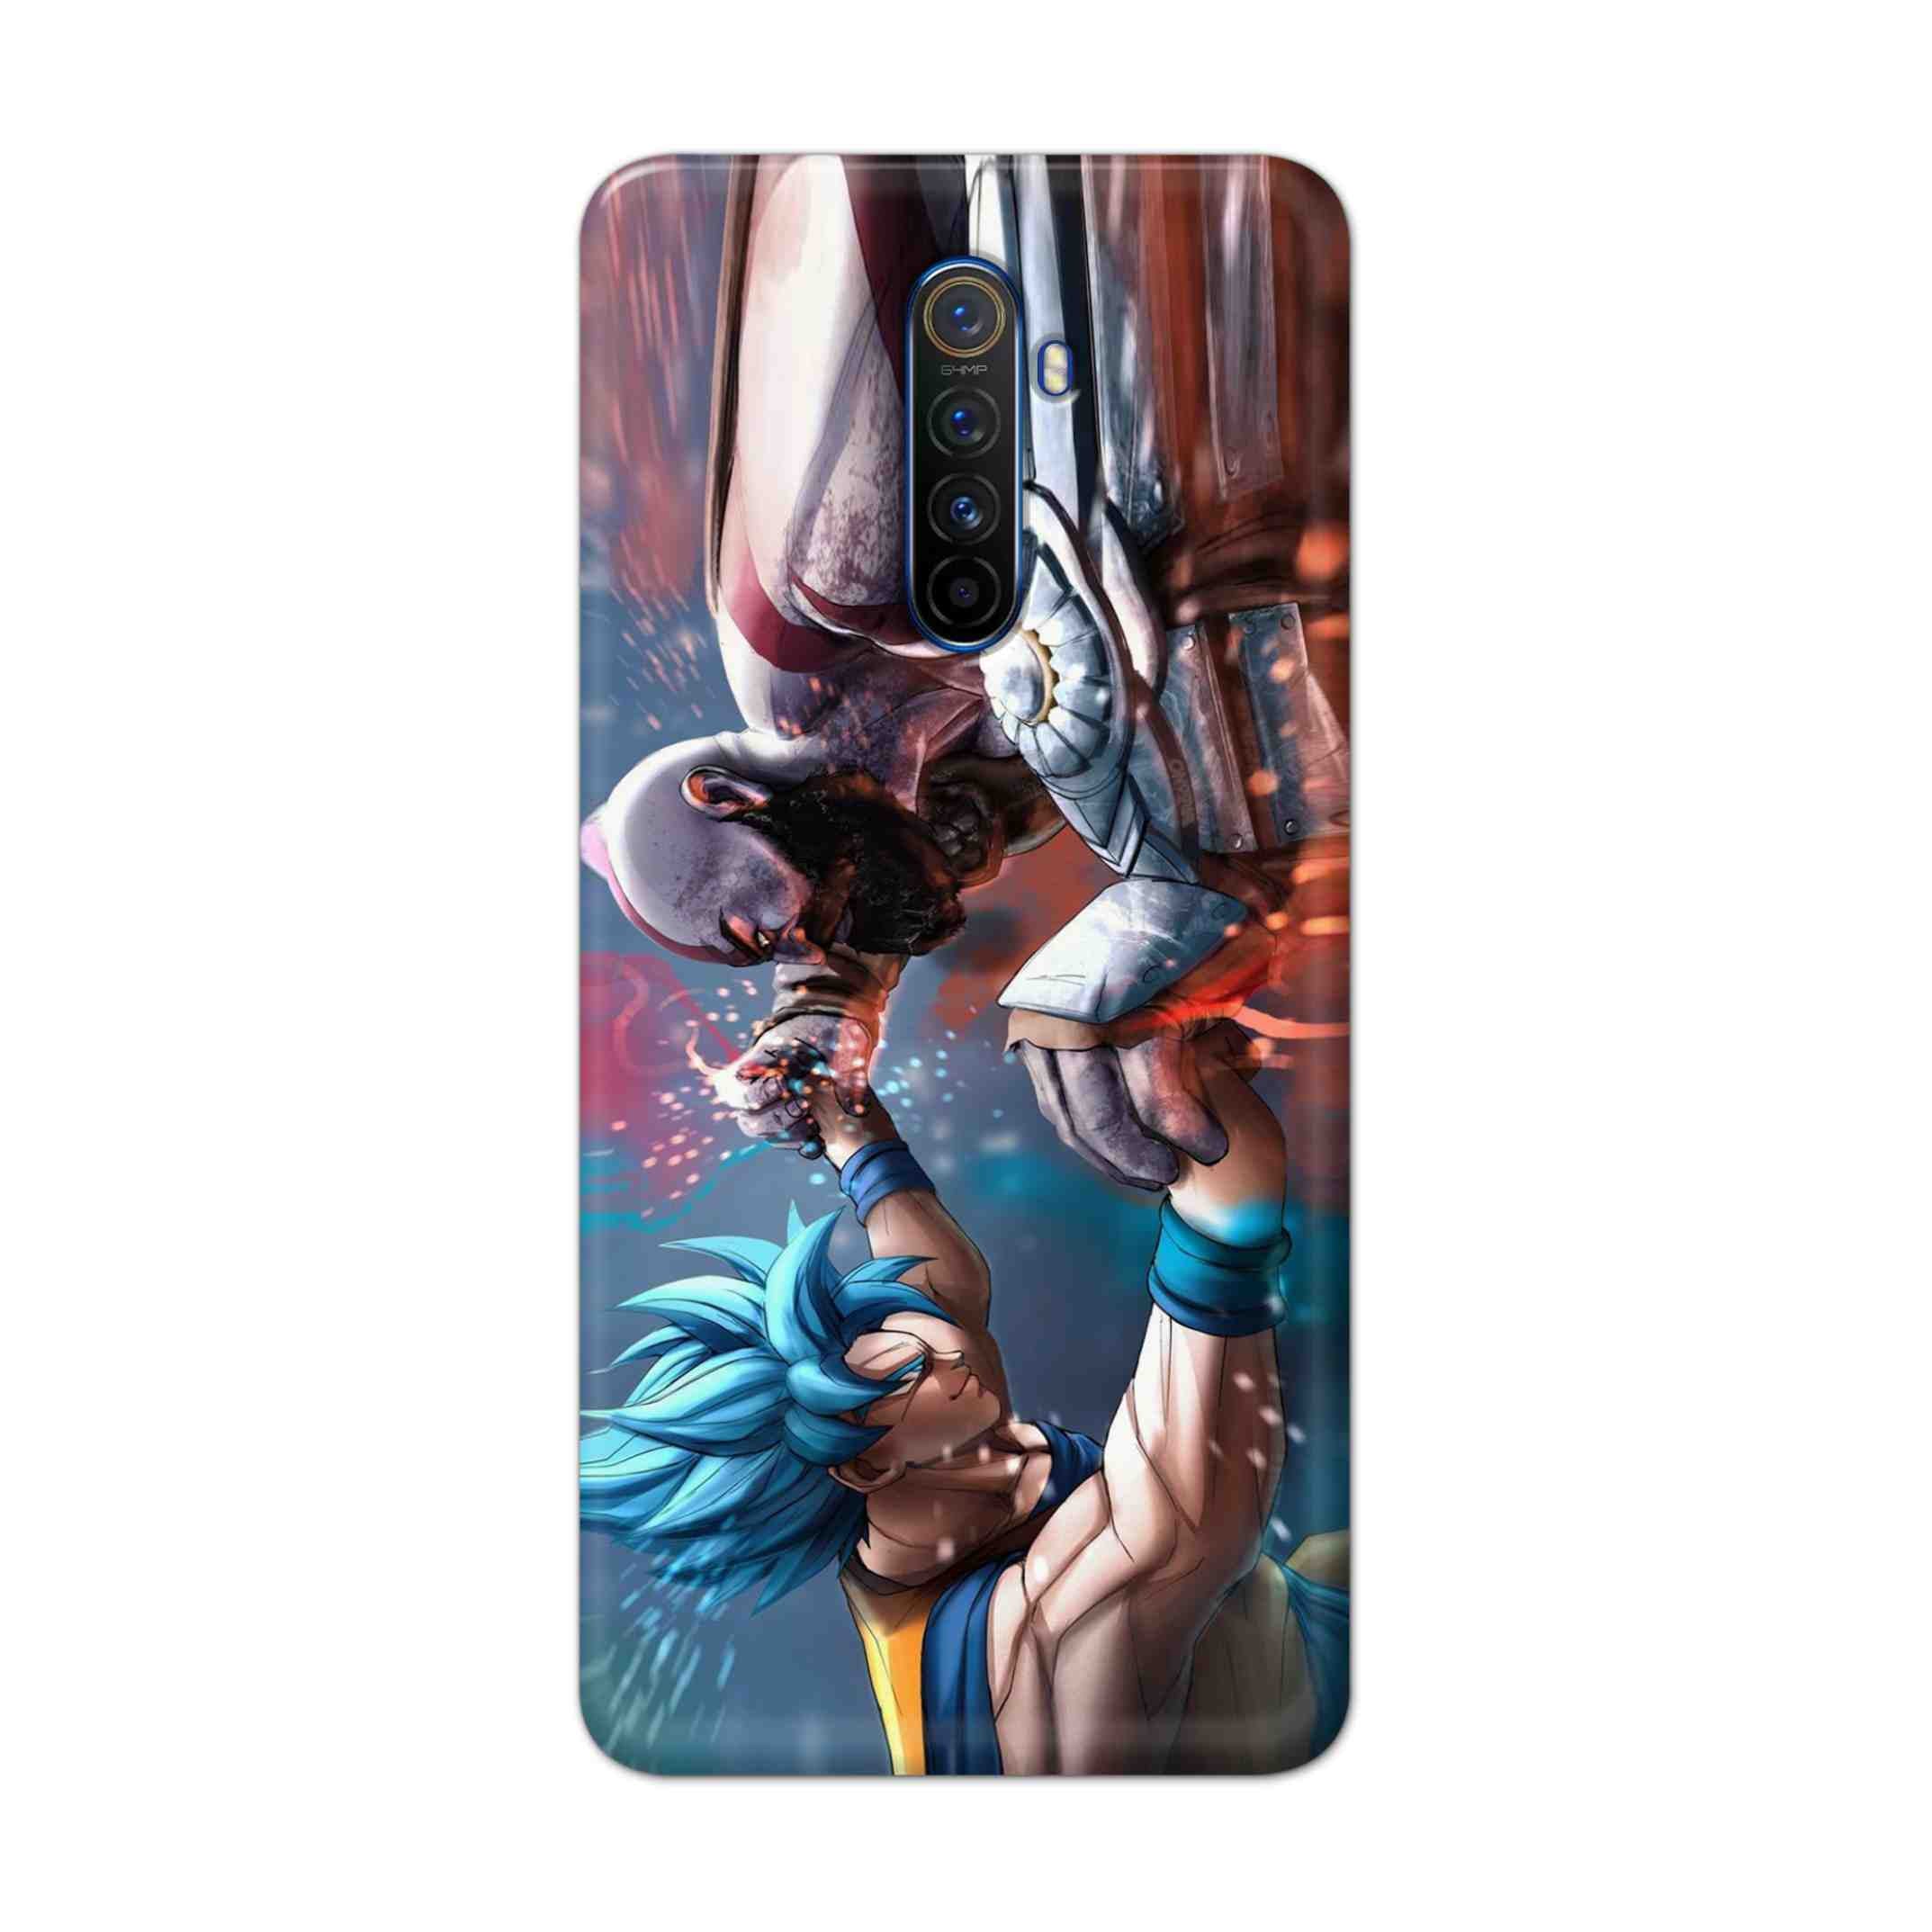 Buy Goku Vs Kratos Hard Back Mobile Phone Case Cover For Realme X2 Pro Online